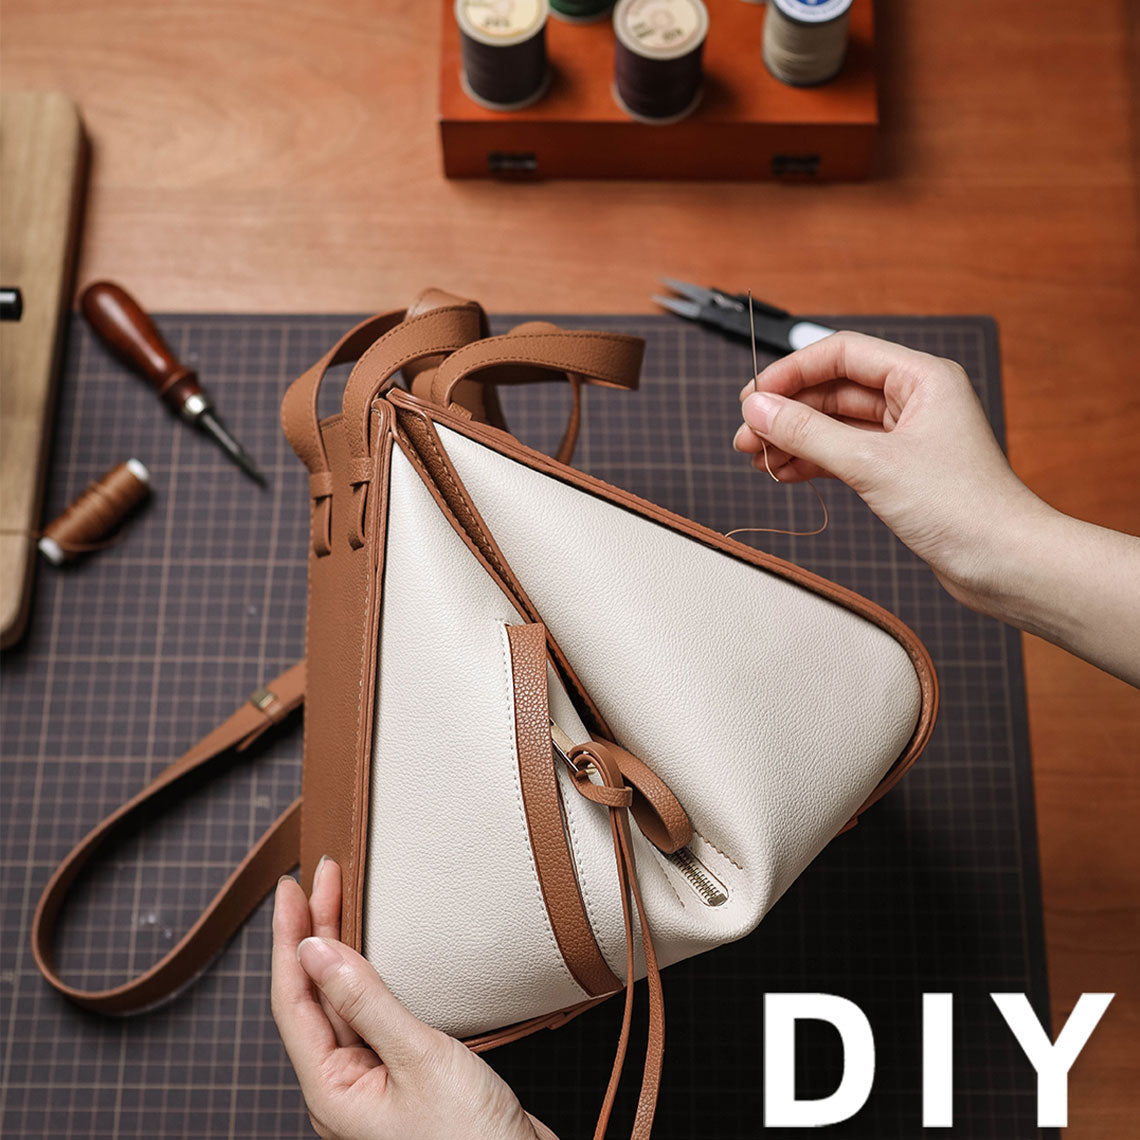 Inspired designer hammock bag DIY making kit | Large leather DIY tote bag kit | POPSEWING™